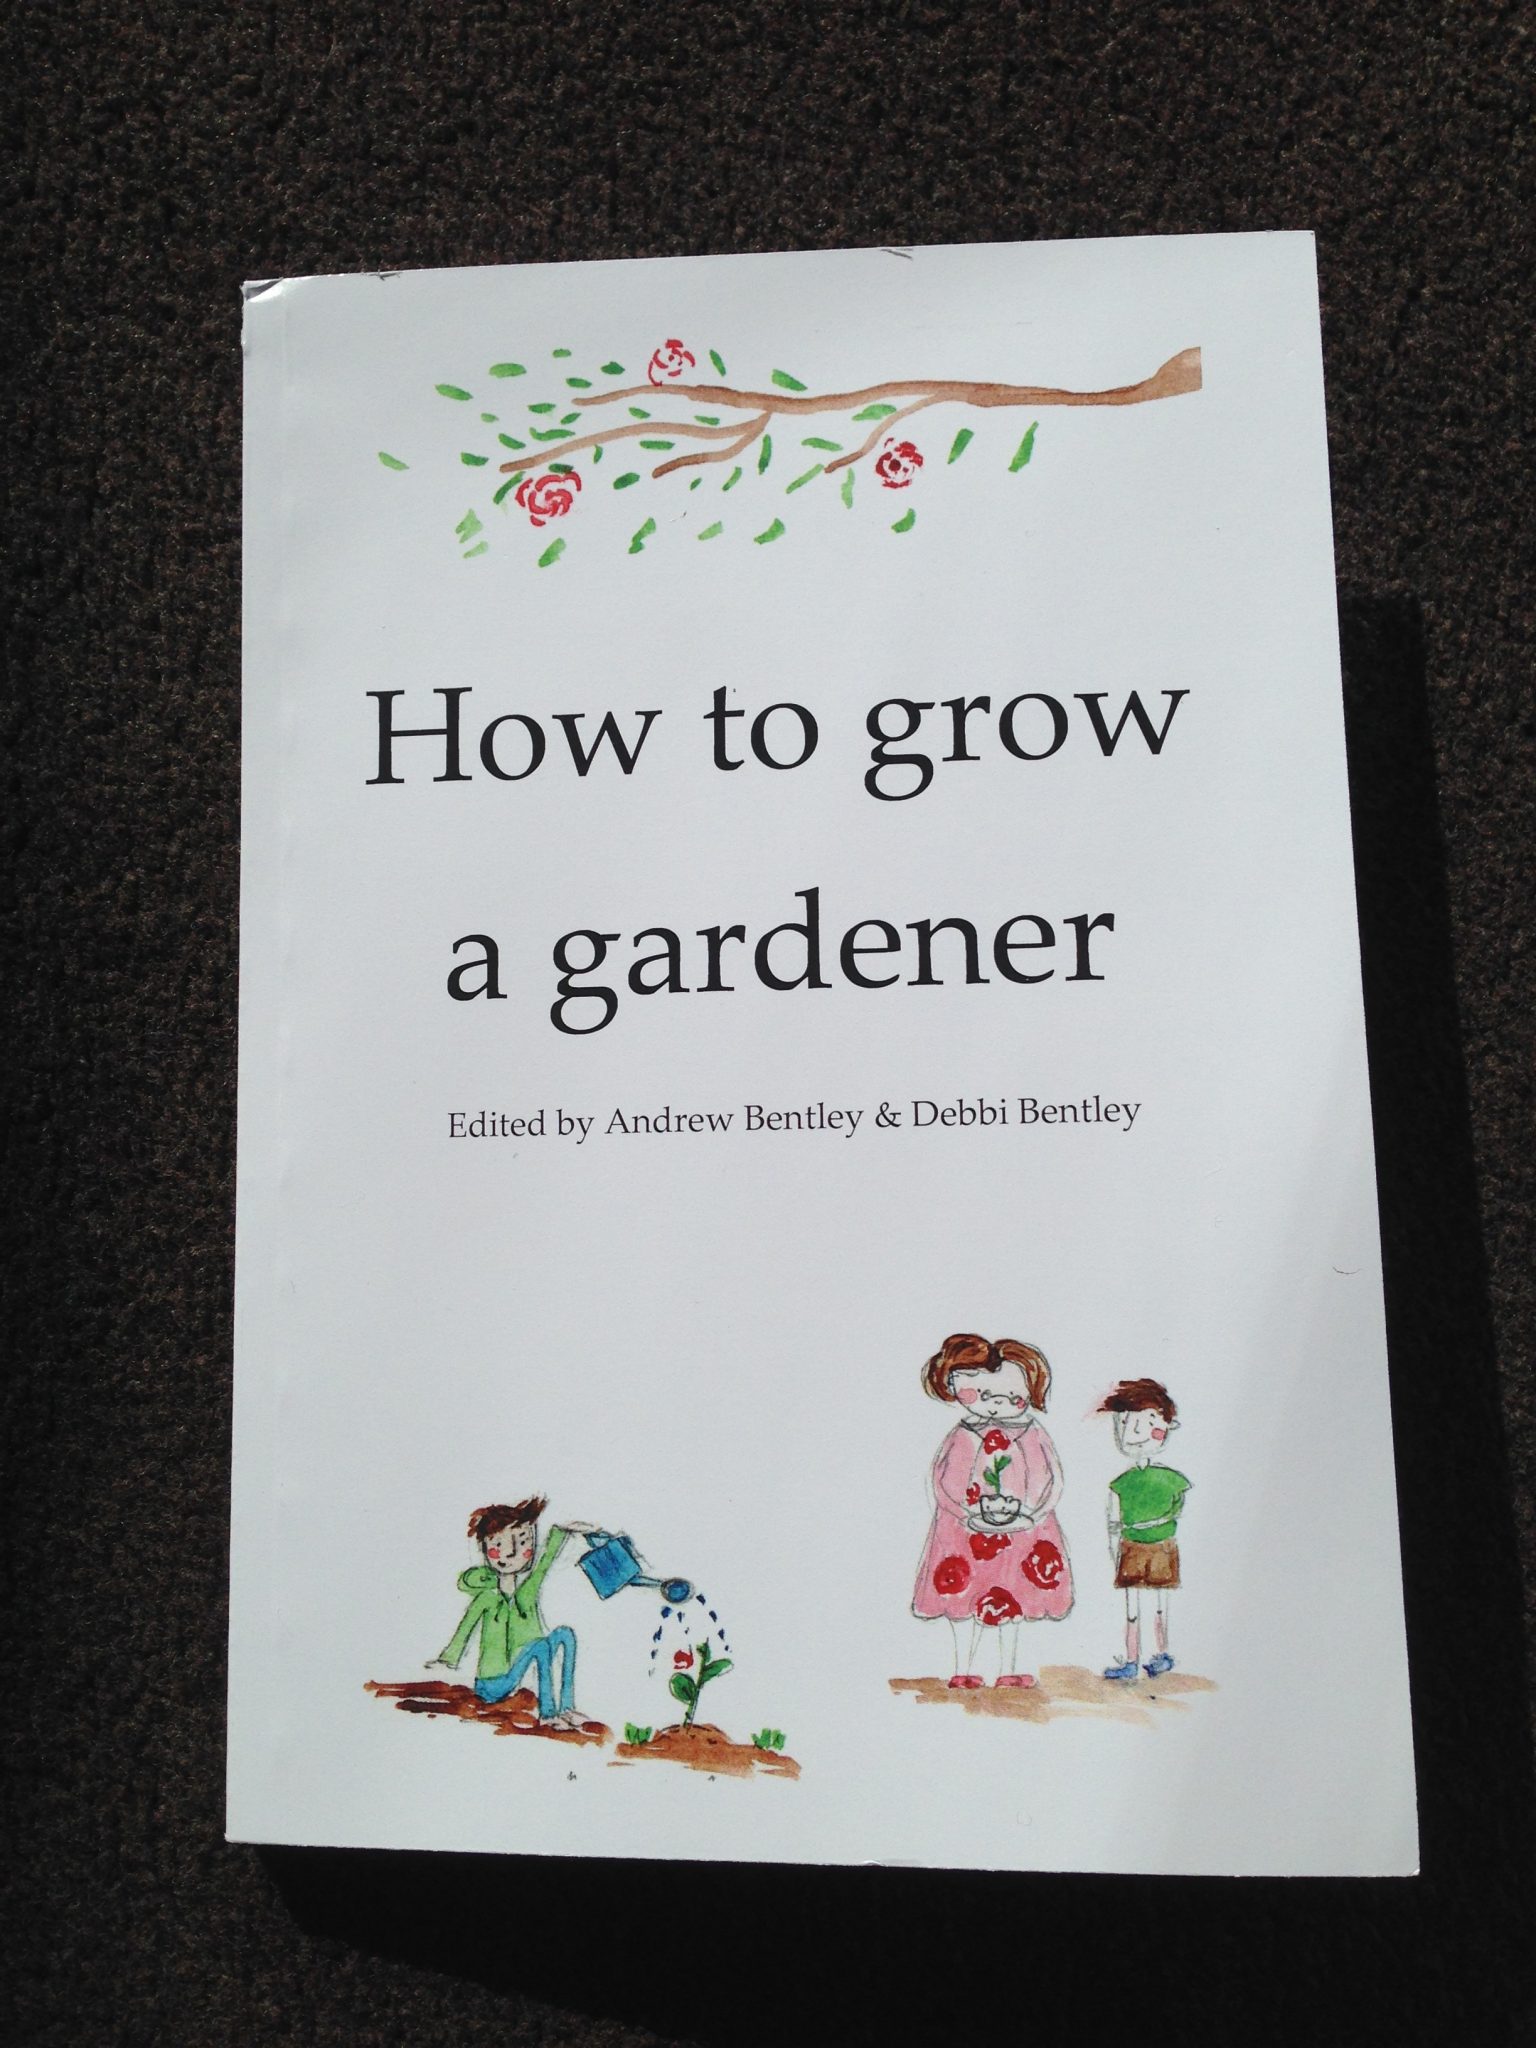 How to grow a gardener